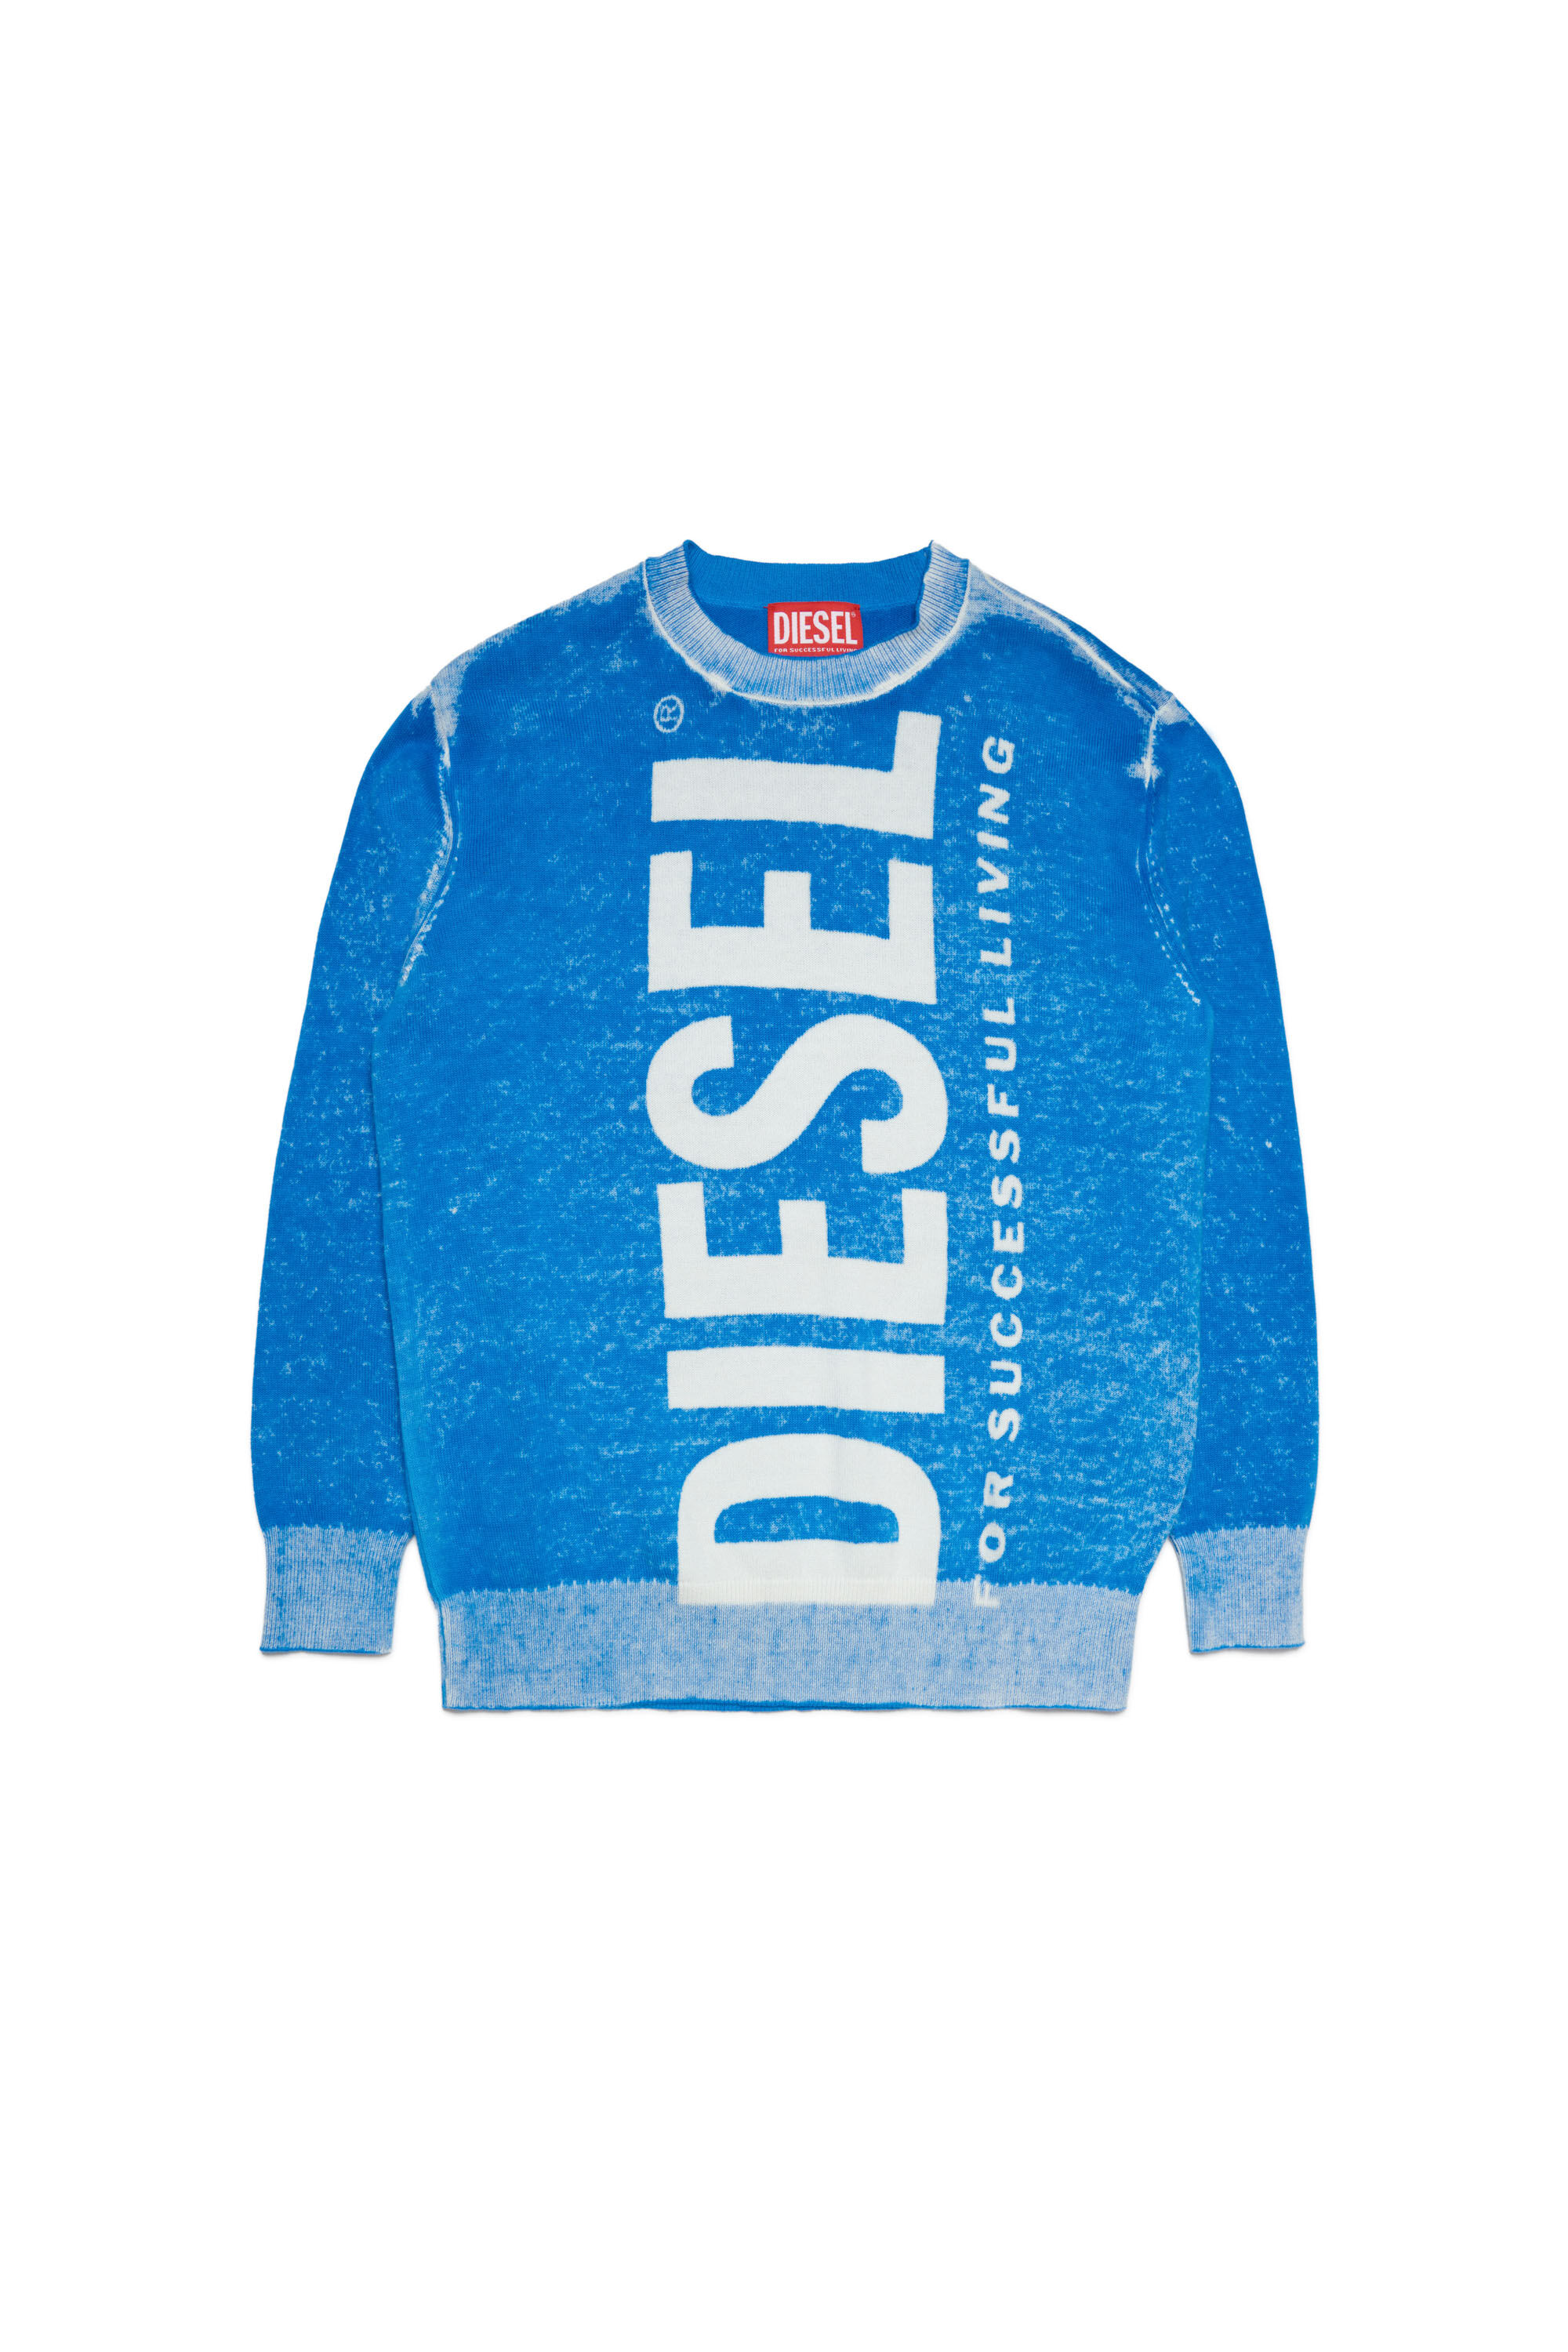 Diesel - KFLOW OVER, Man Knit sweater with Diesel lettering in Blue - Image 1